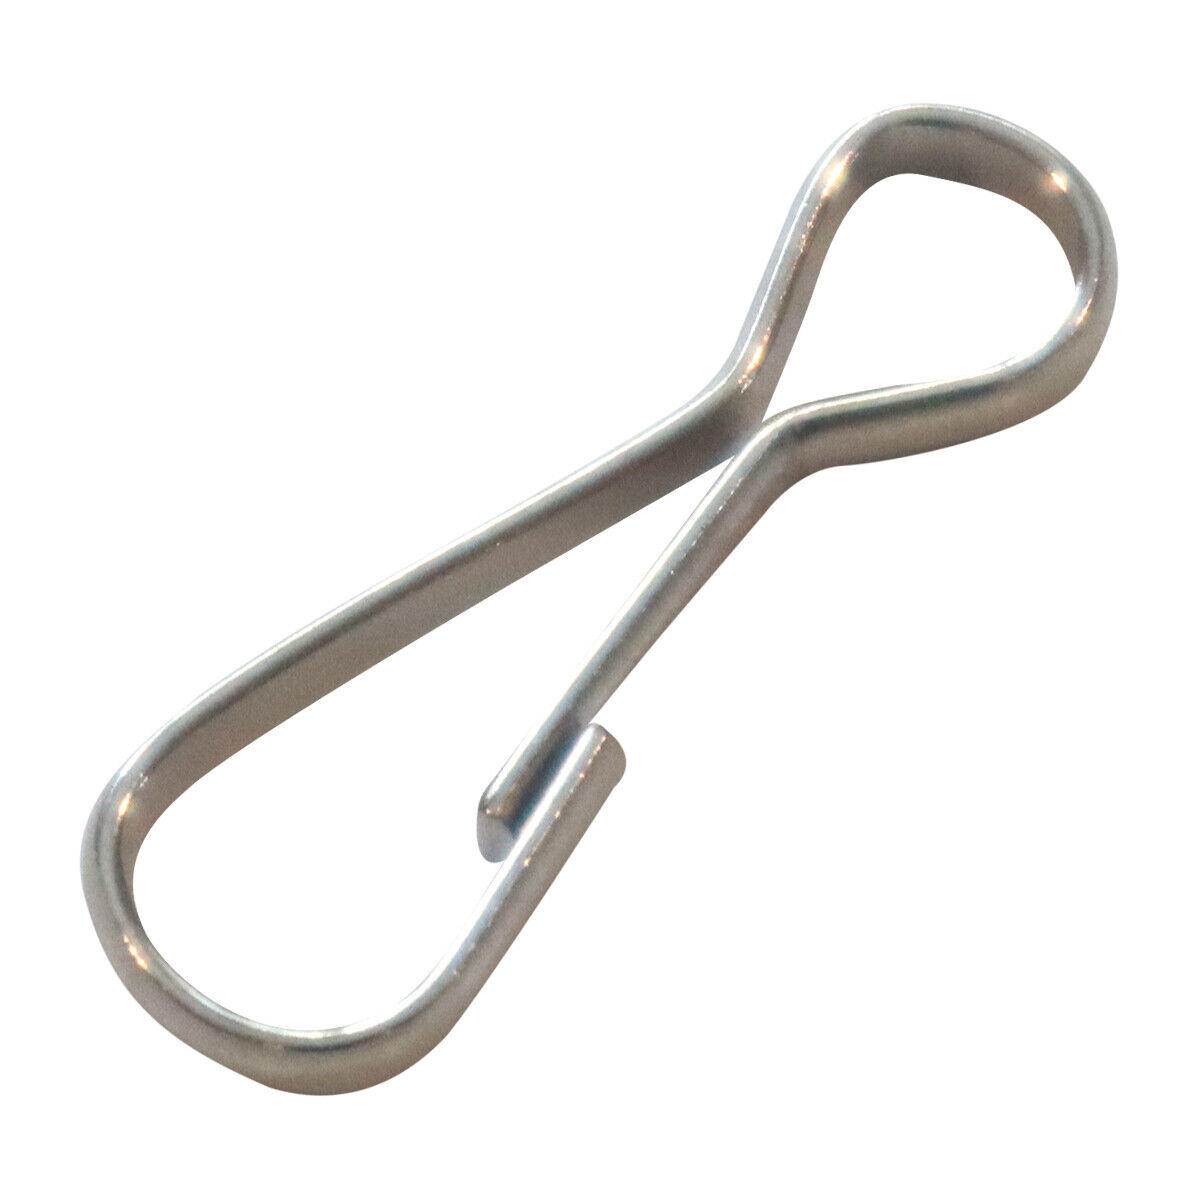 10 Small Metal J Hook Spring Clips for DIY Lanyards & Keychains - 1 1/4 Inch Specialist ID 7743-1020 - фотография #5